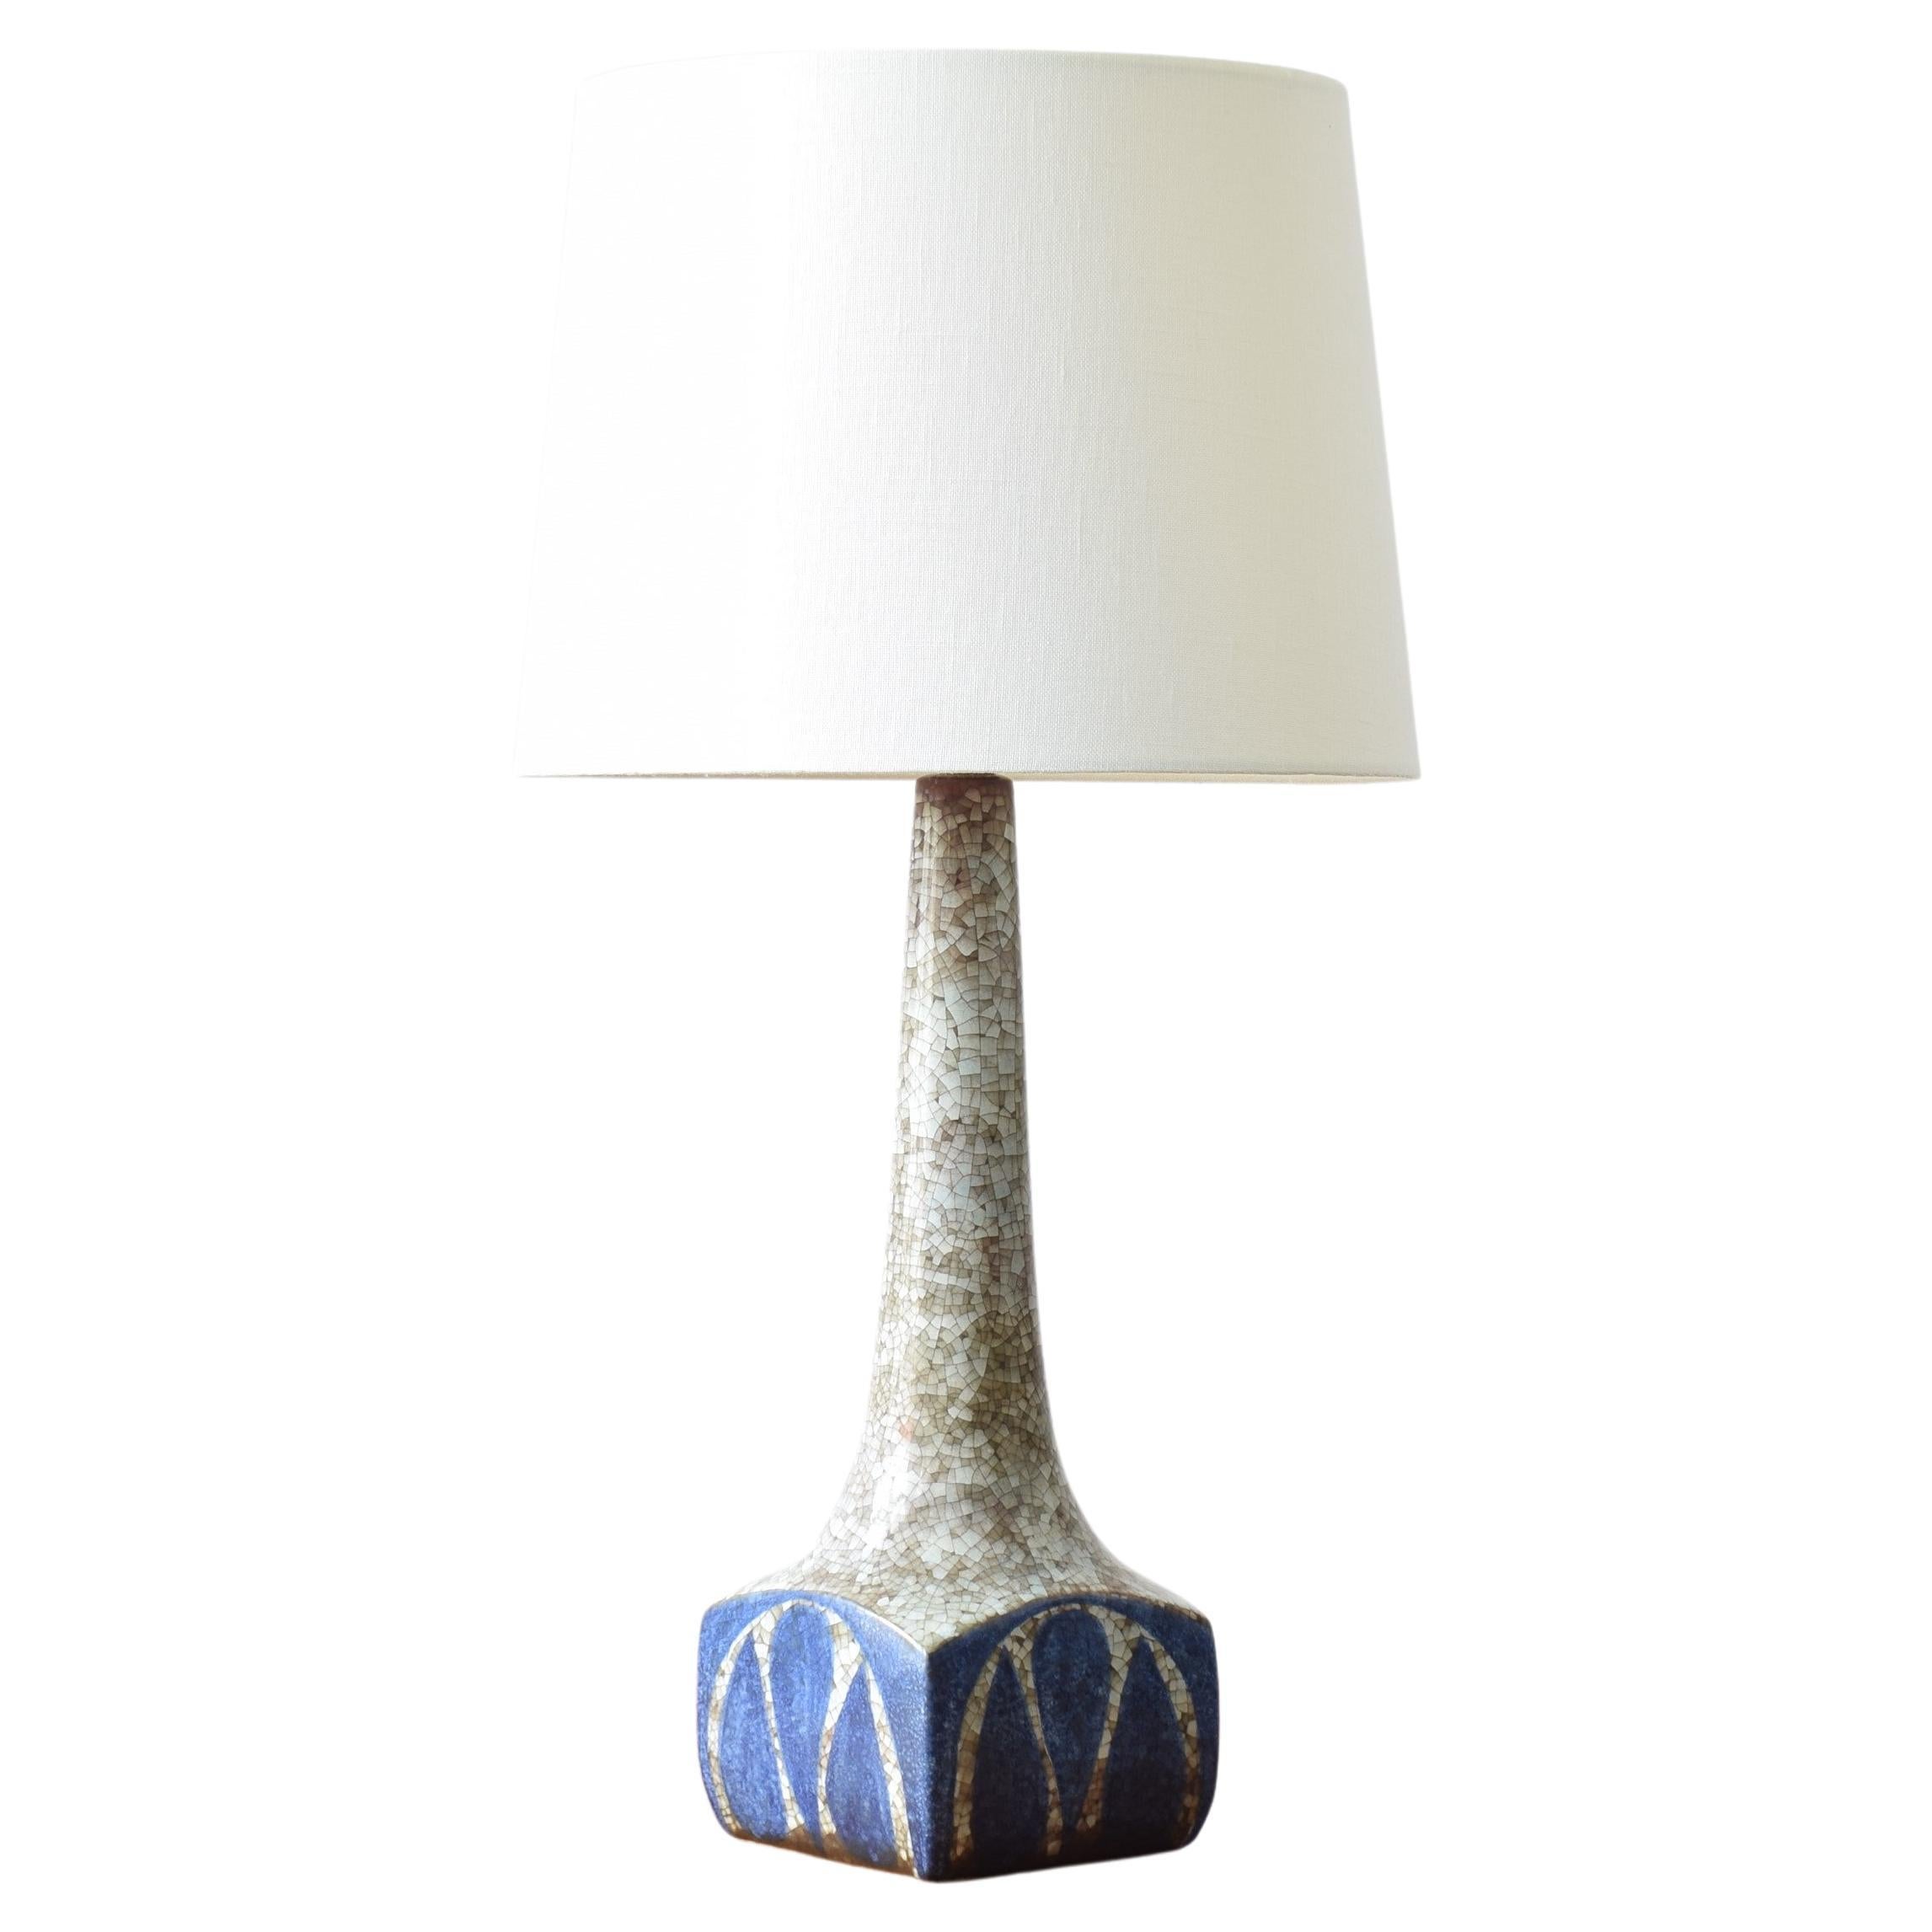 Danish Tall Ceramic Table Lamp Blue Persia Glaze, Marianne Starck for MA&S 1960s